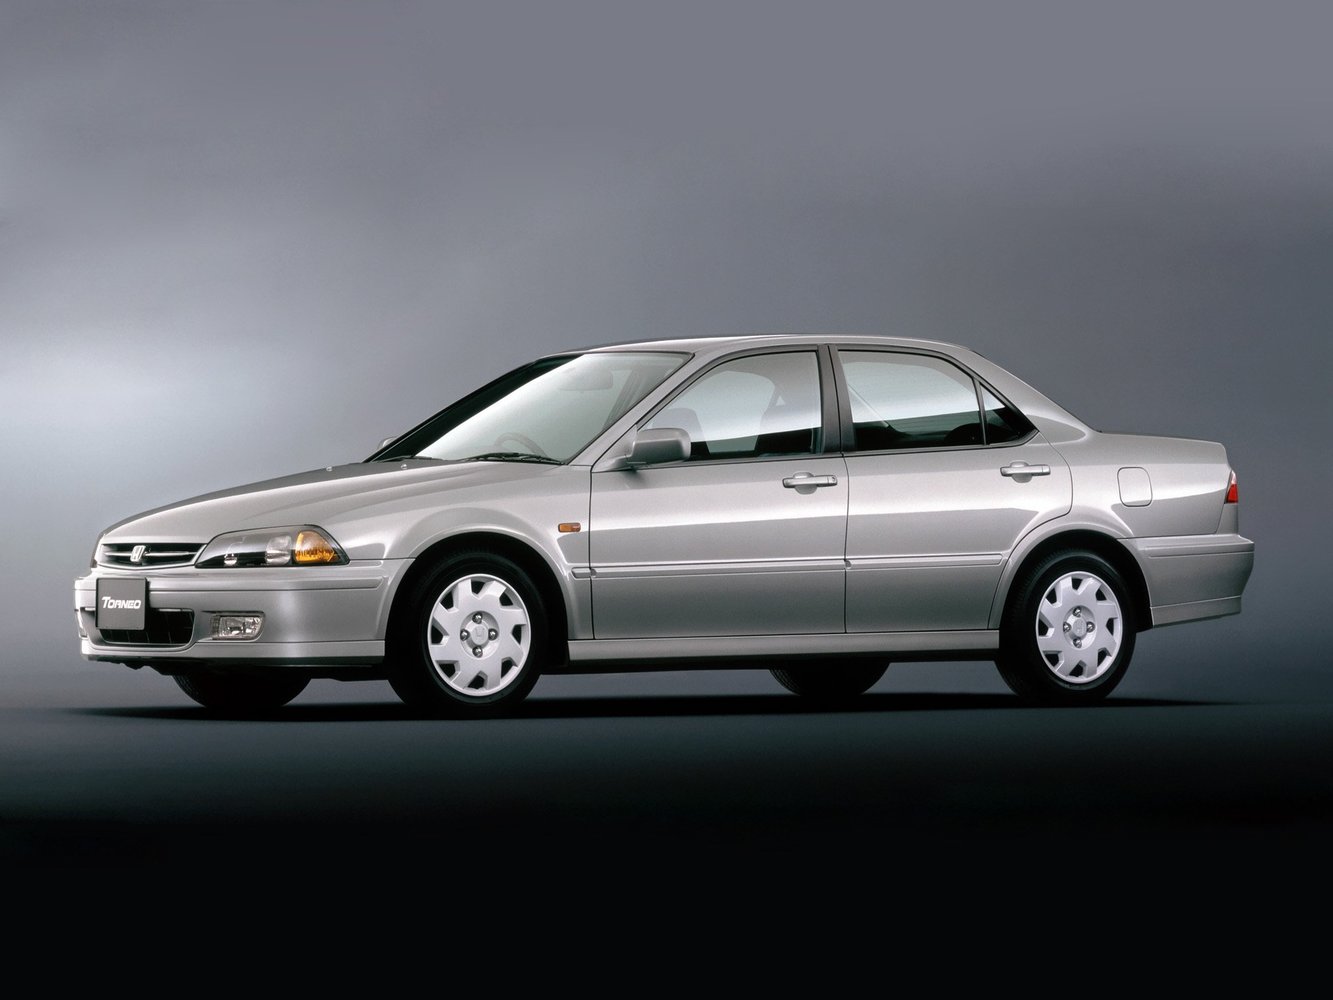 седан Honda Torneo 2001 - 2002г выпуска модификация 1.8 AT (140 л.с.)